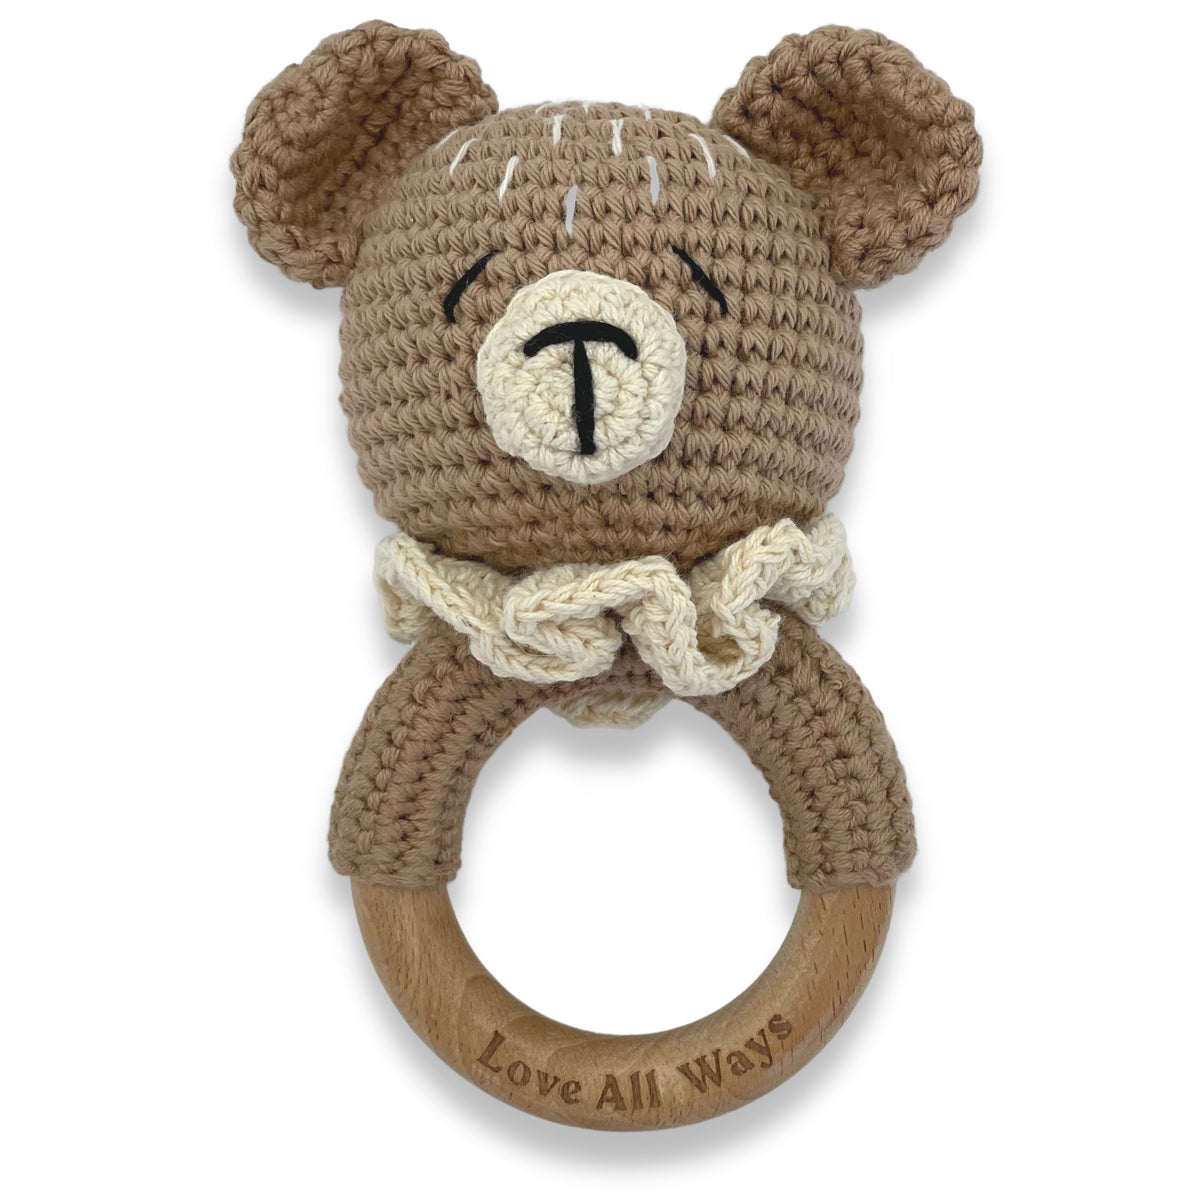 100% Cotton Hand Crochet Baby Rattle - Teddy